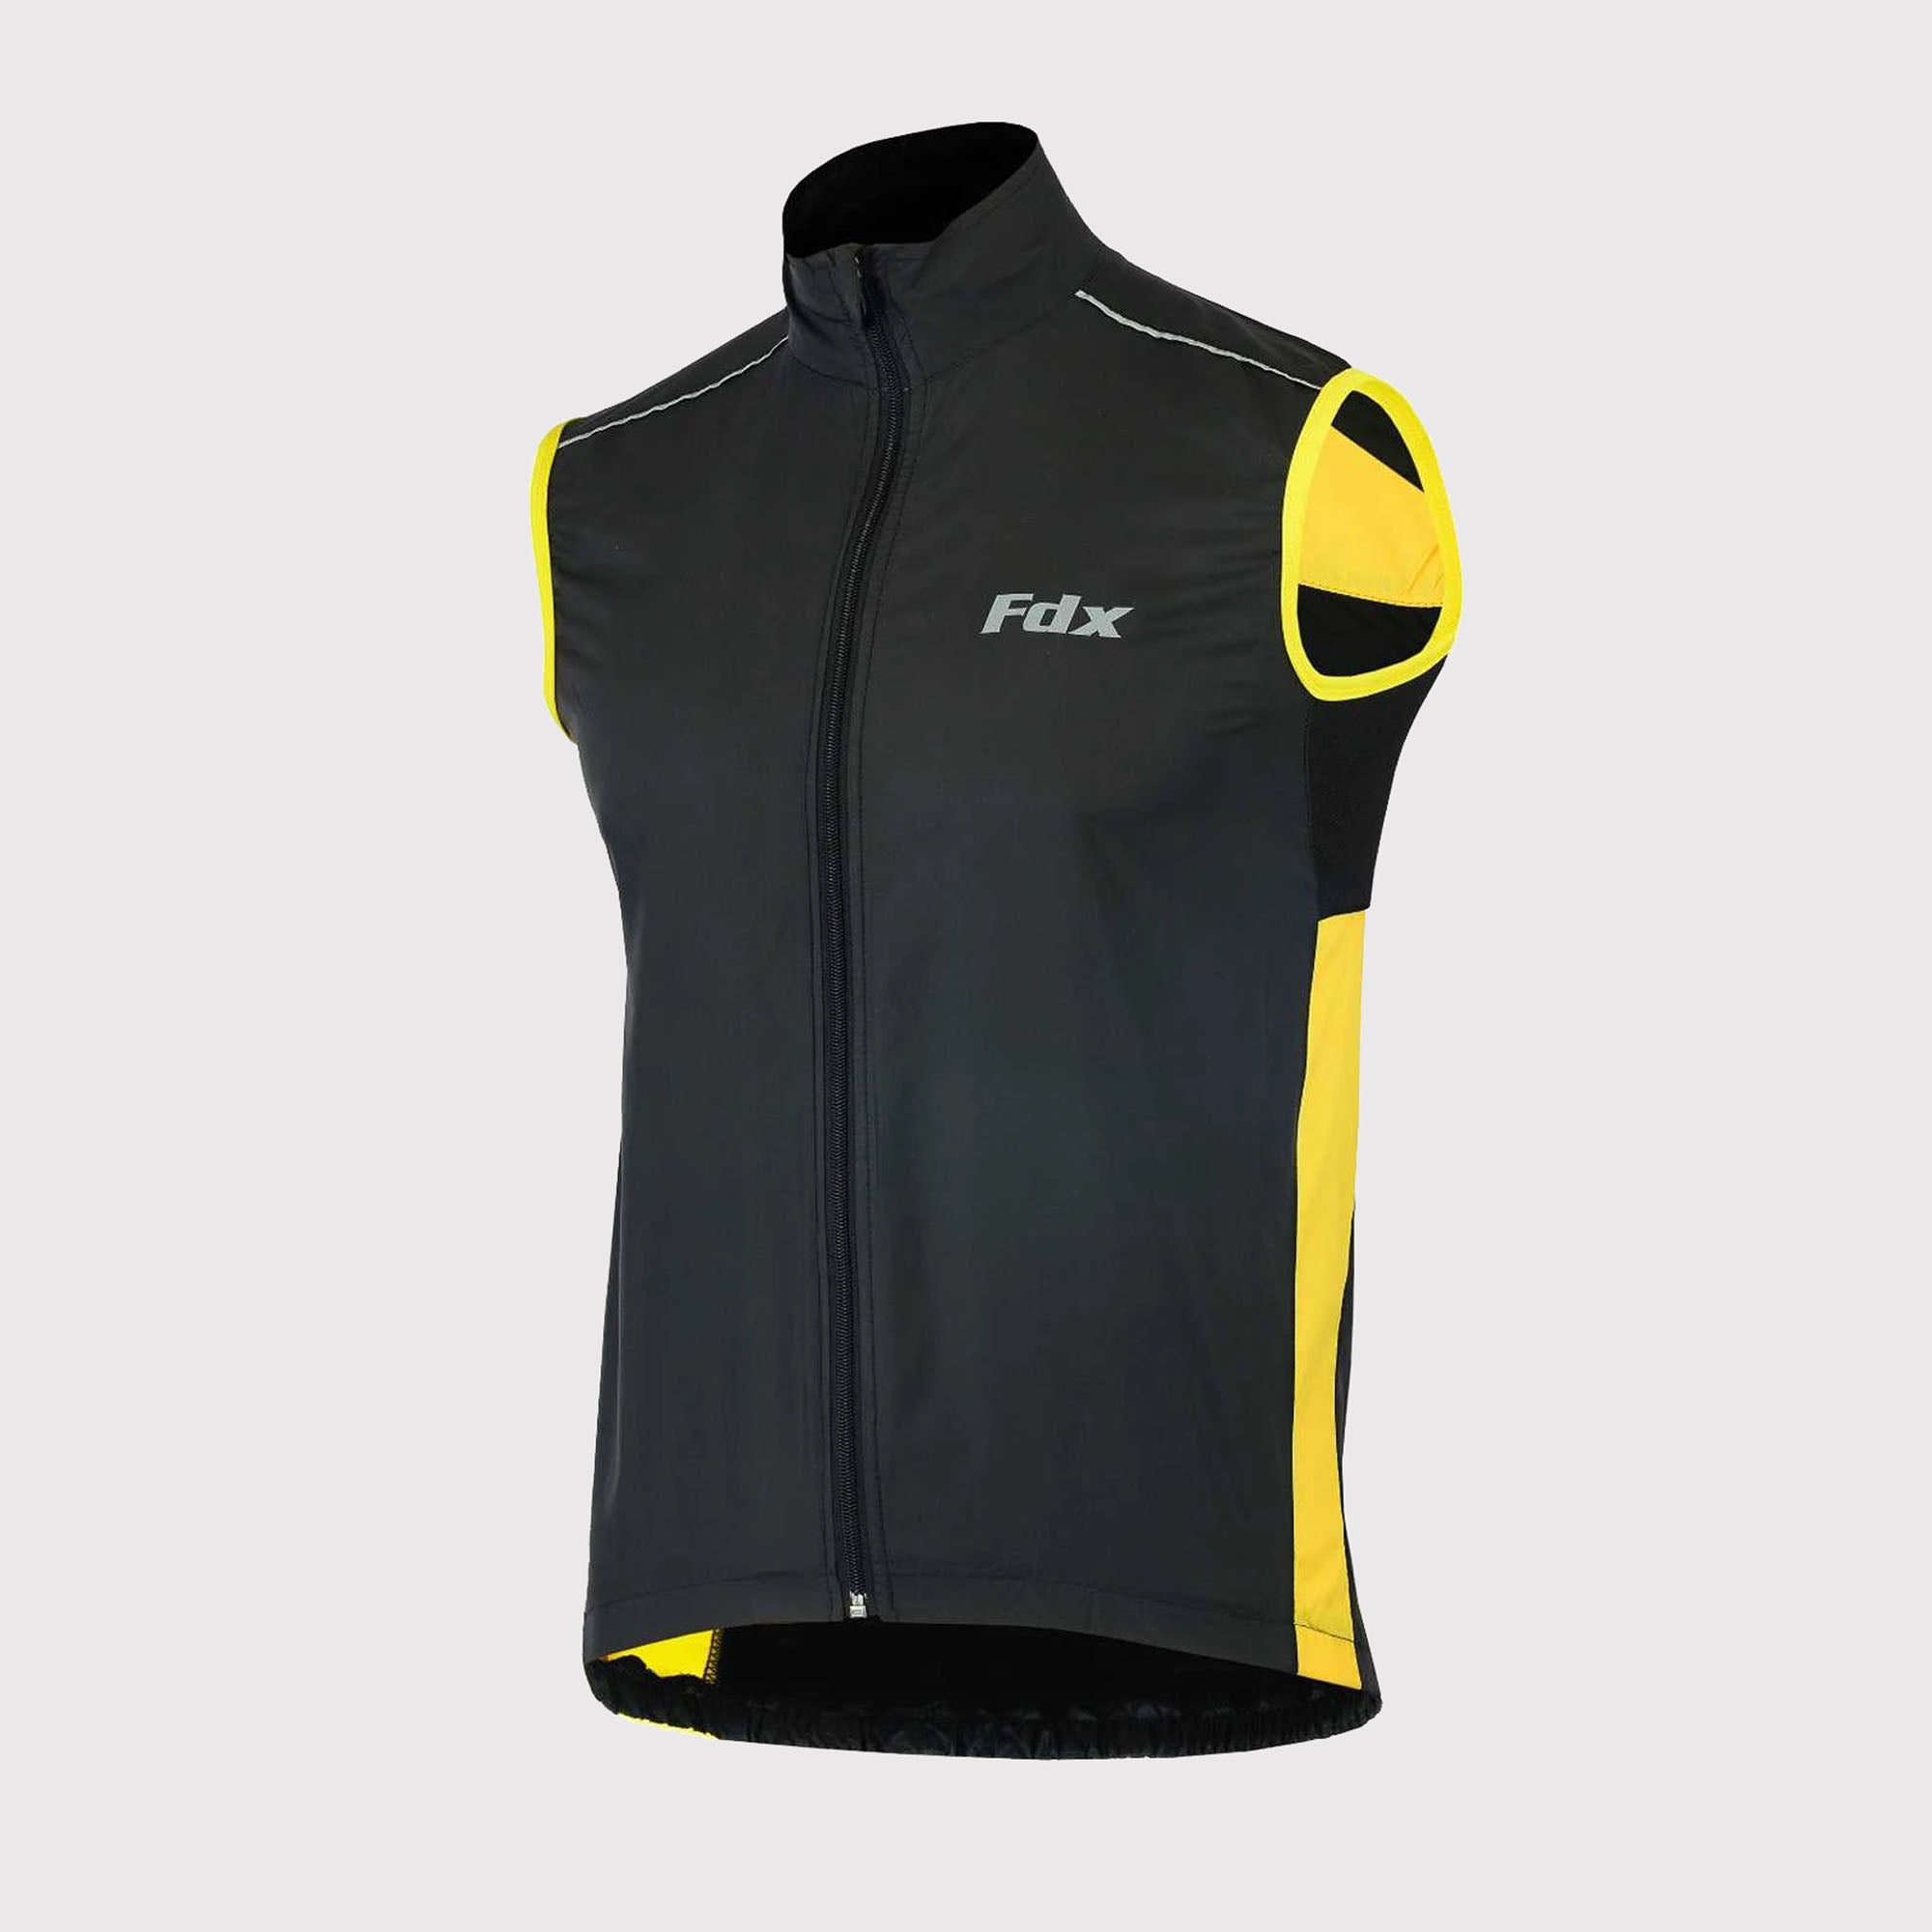 Fdx Men's Yellow Cycling Gilet Sleeveless Vest for Winter Clothing Hi-Viz Refectors, Lightweight, Windproof, Waterproof & Pockets - Dart